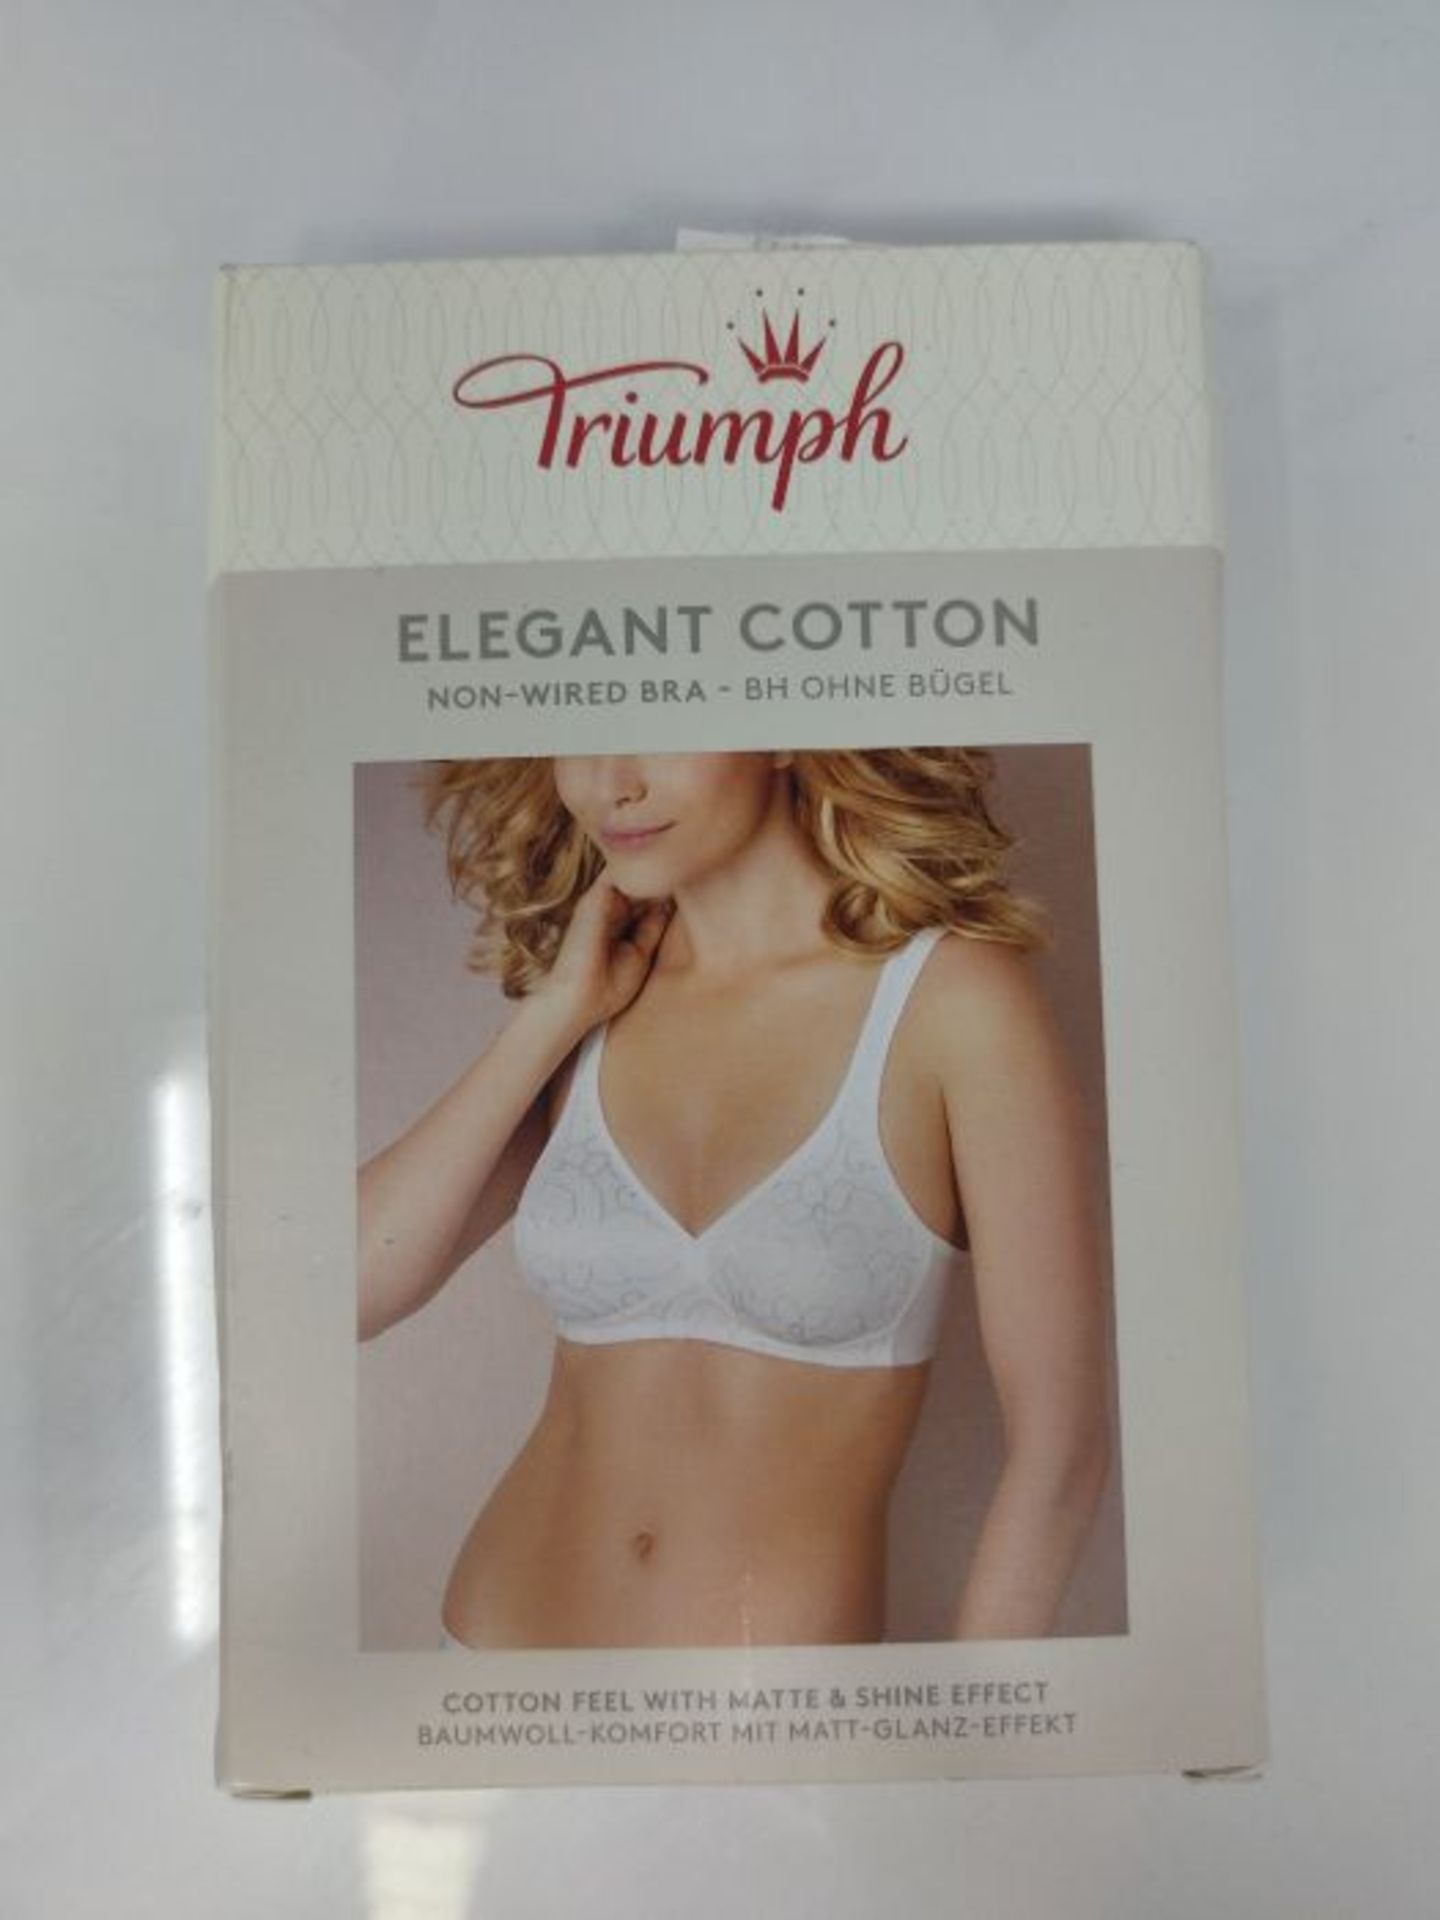 Triumph Women's Elegant Cotton N Everyday Bra, Beige, 44B - Image 2 of 3